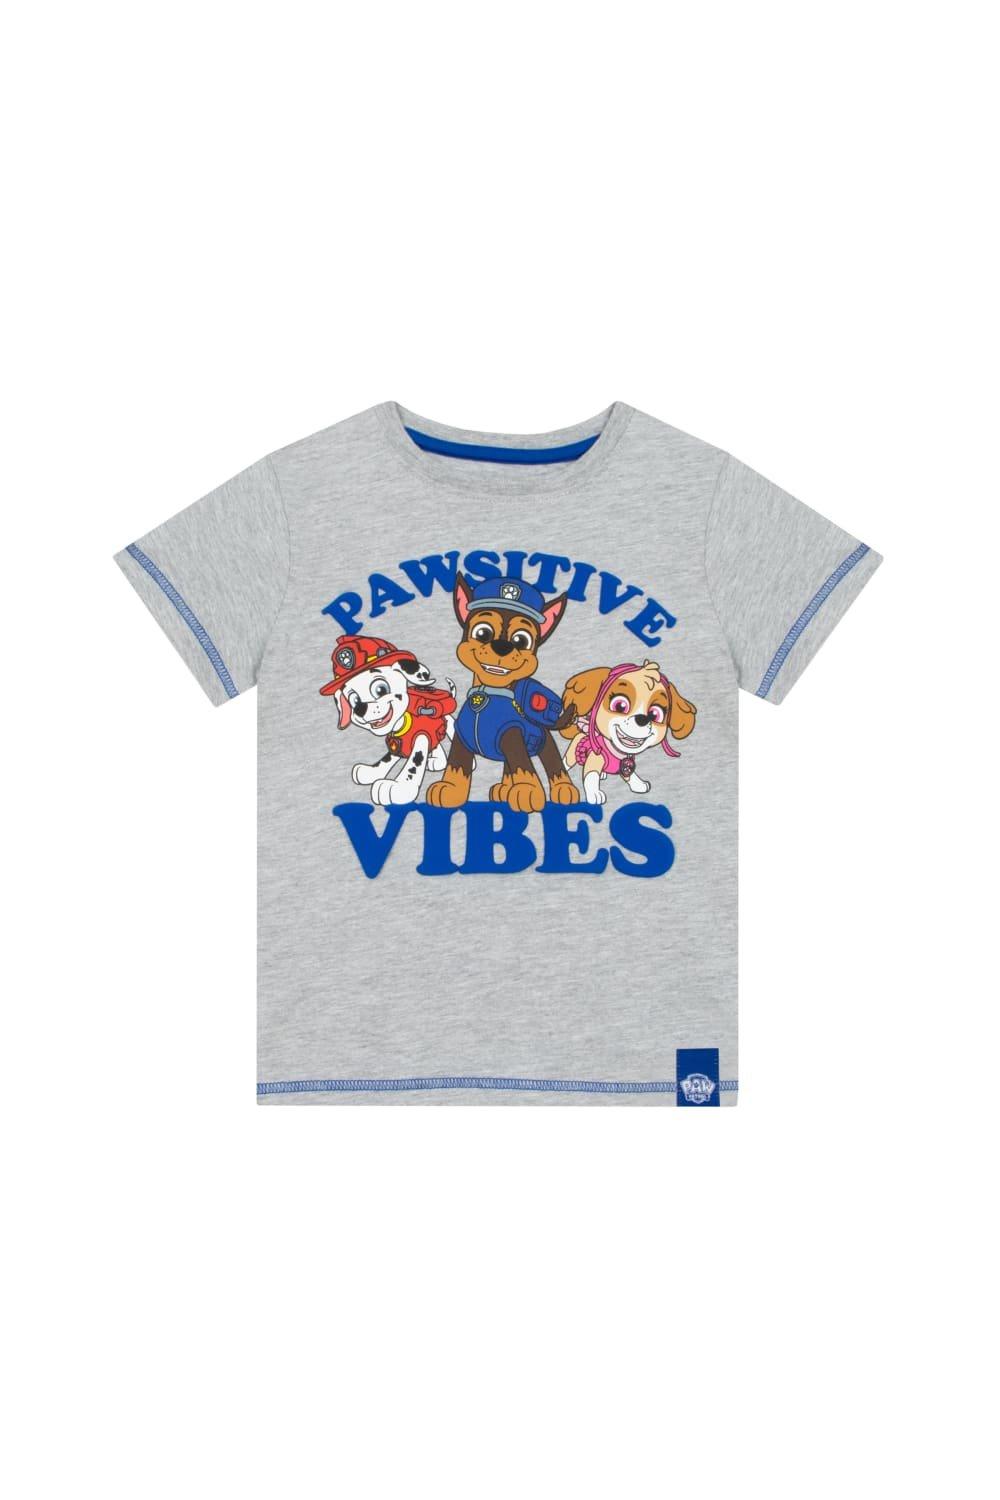 PAWsitive Vibes T-Shirt